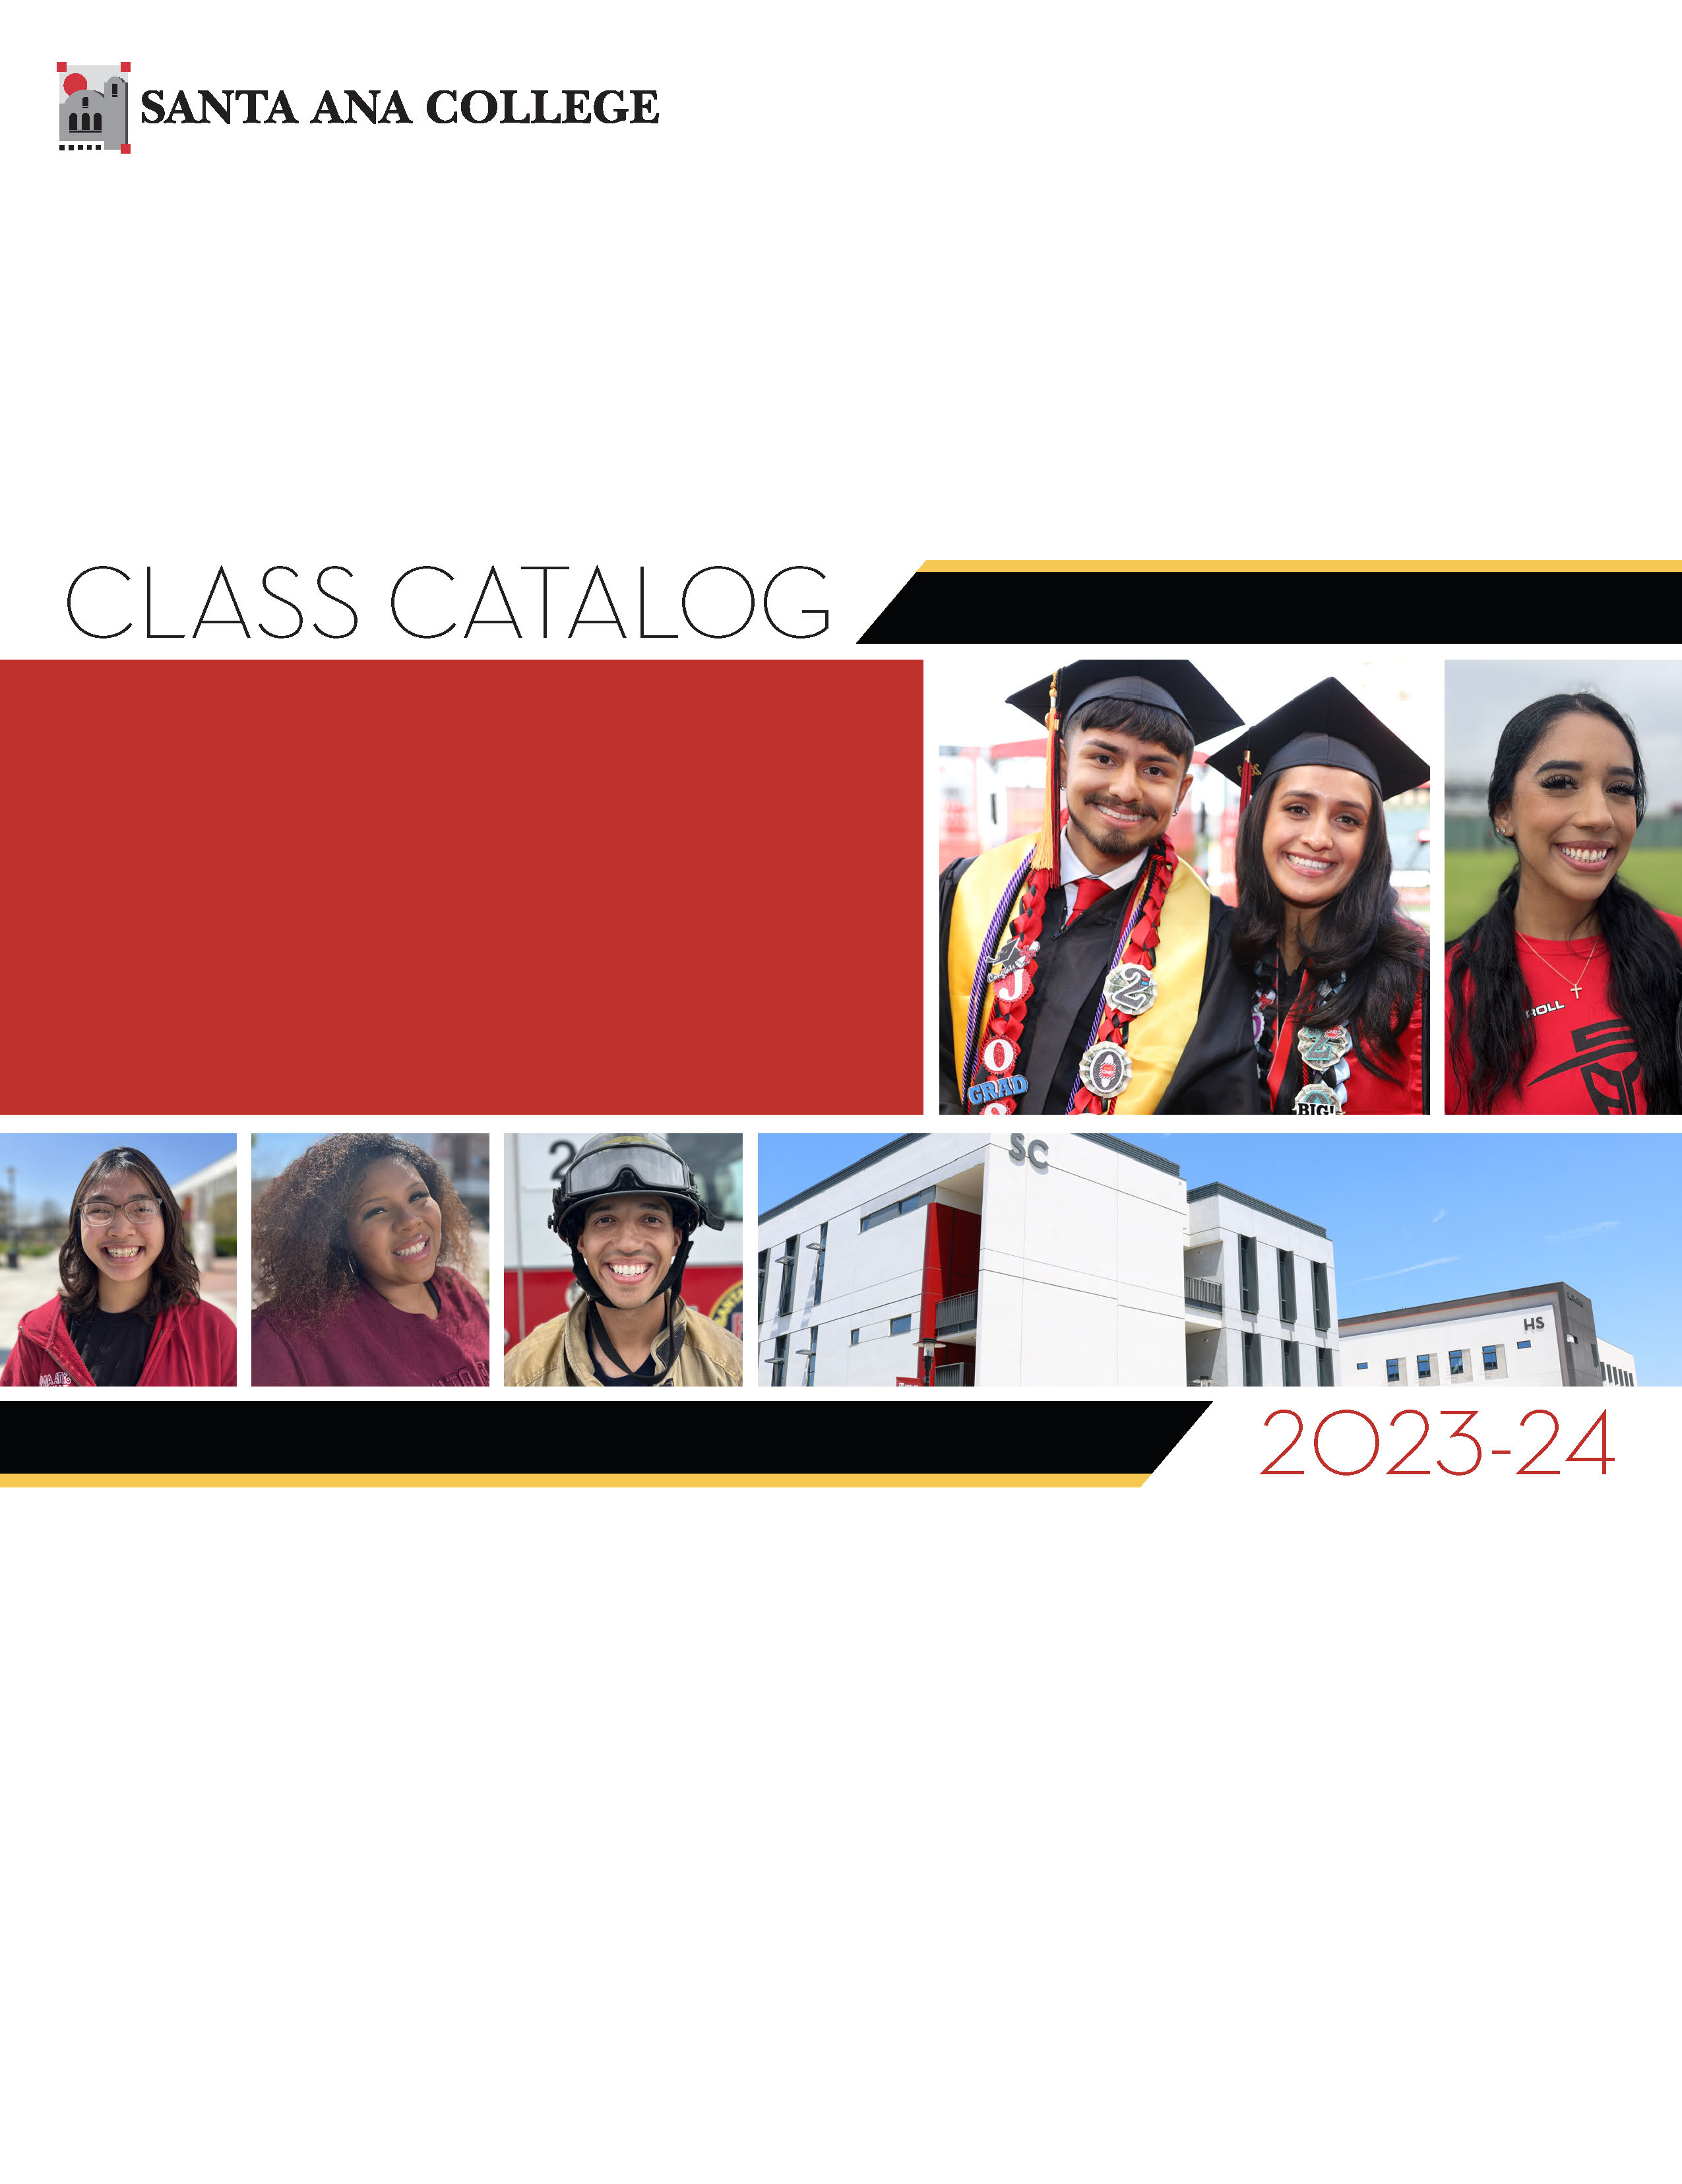 2023-24 class catalog